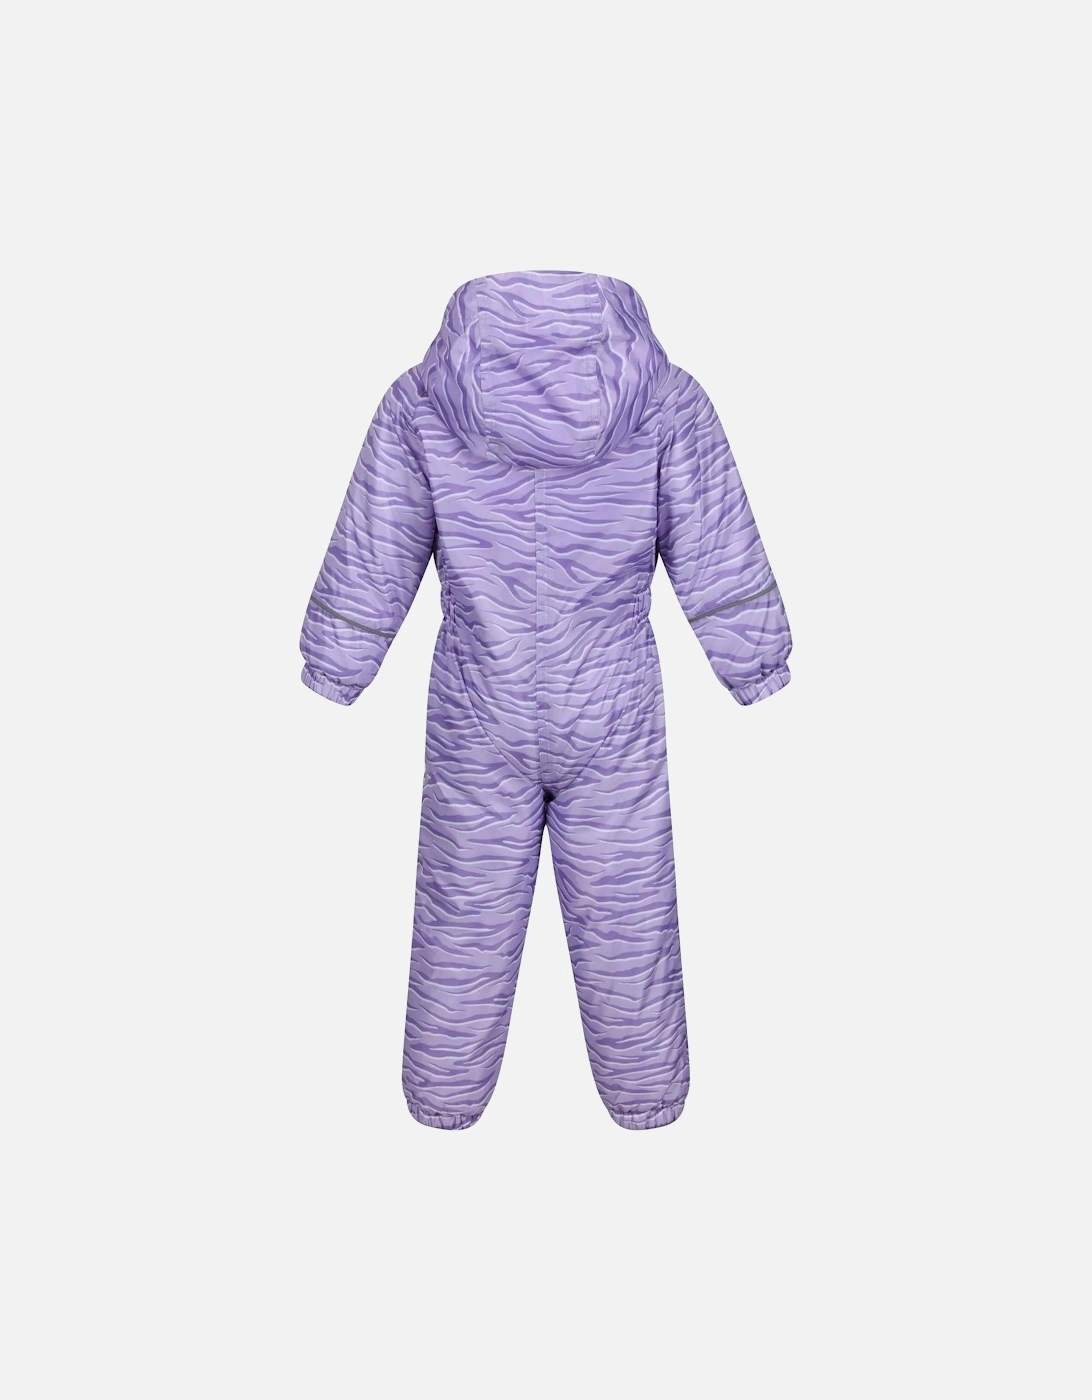 Childrens/Kids Splat II Zebra Print Waterproof Puddle Suit